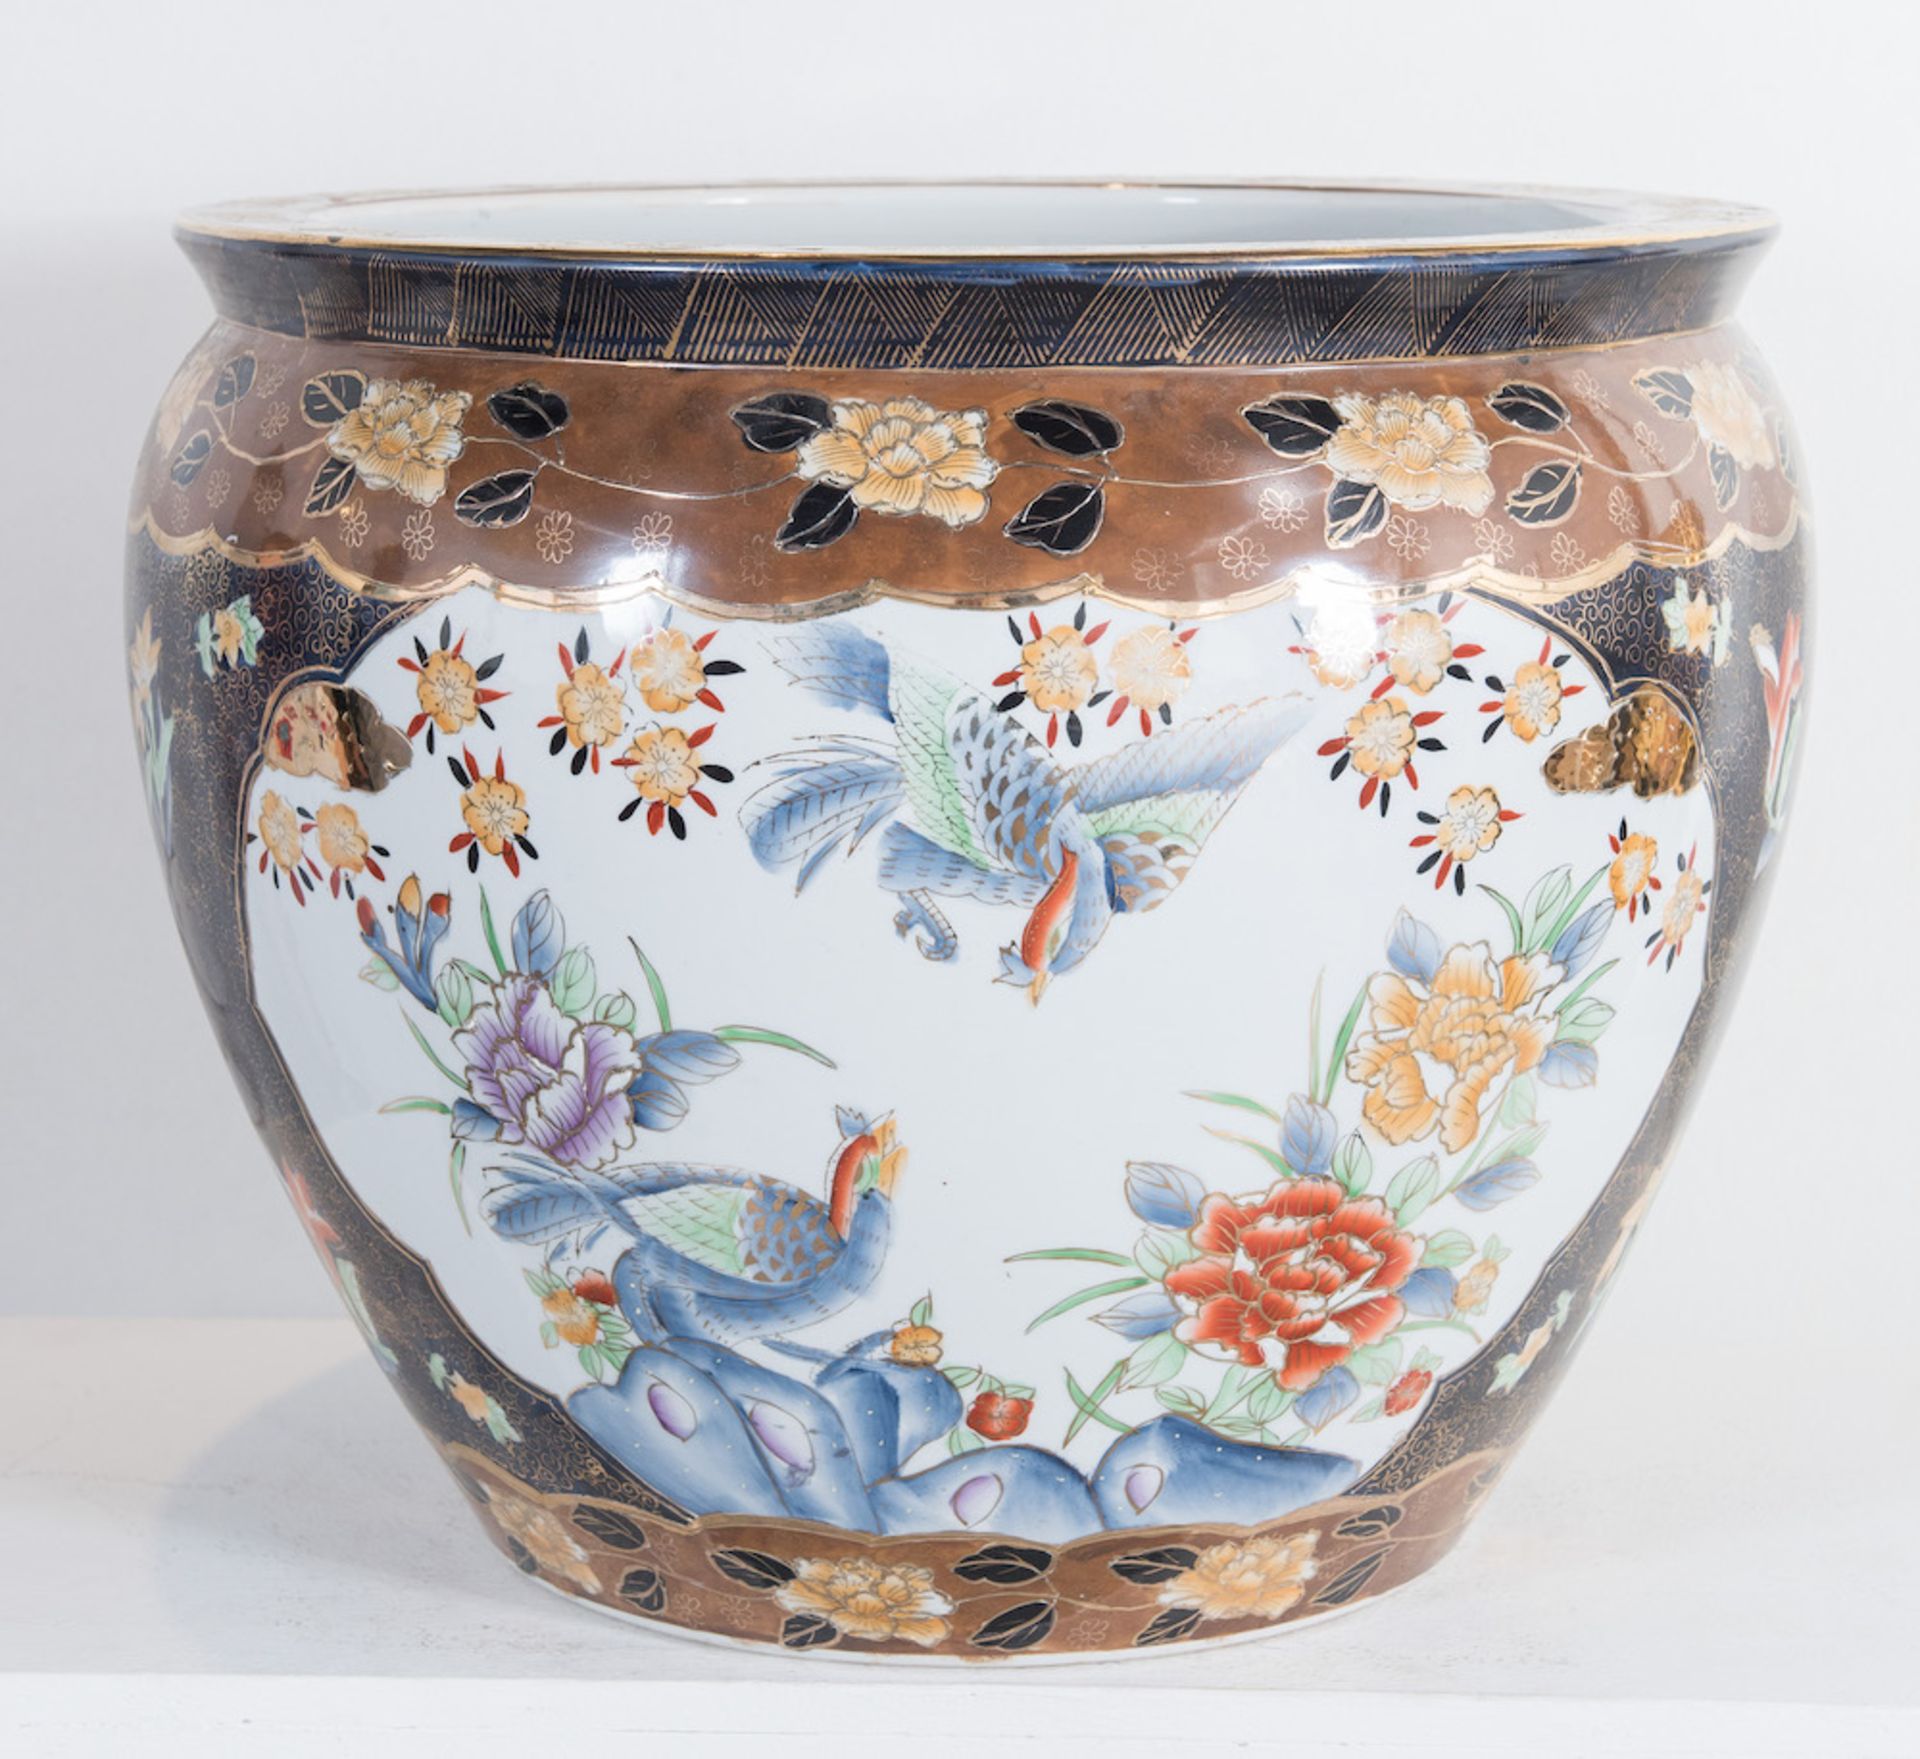 Grande cachepot in porcellana. Cina, XX secolo. Reca scene di fiori e uccelli. H. cm 44,5; diametro: - Bild 5 aus 5